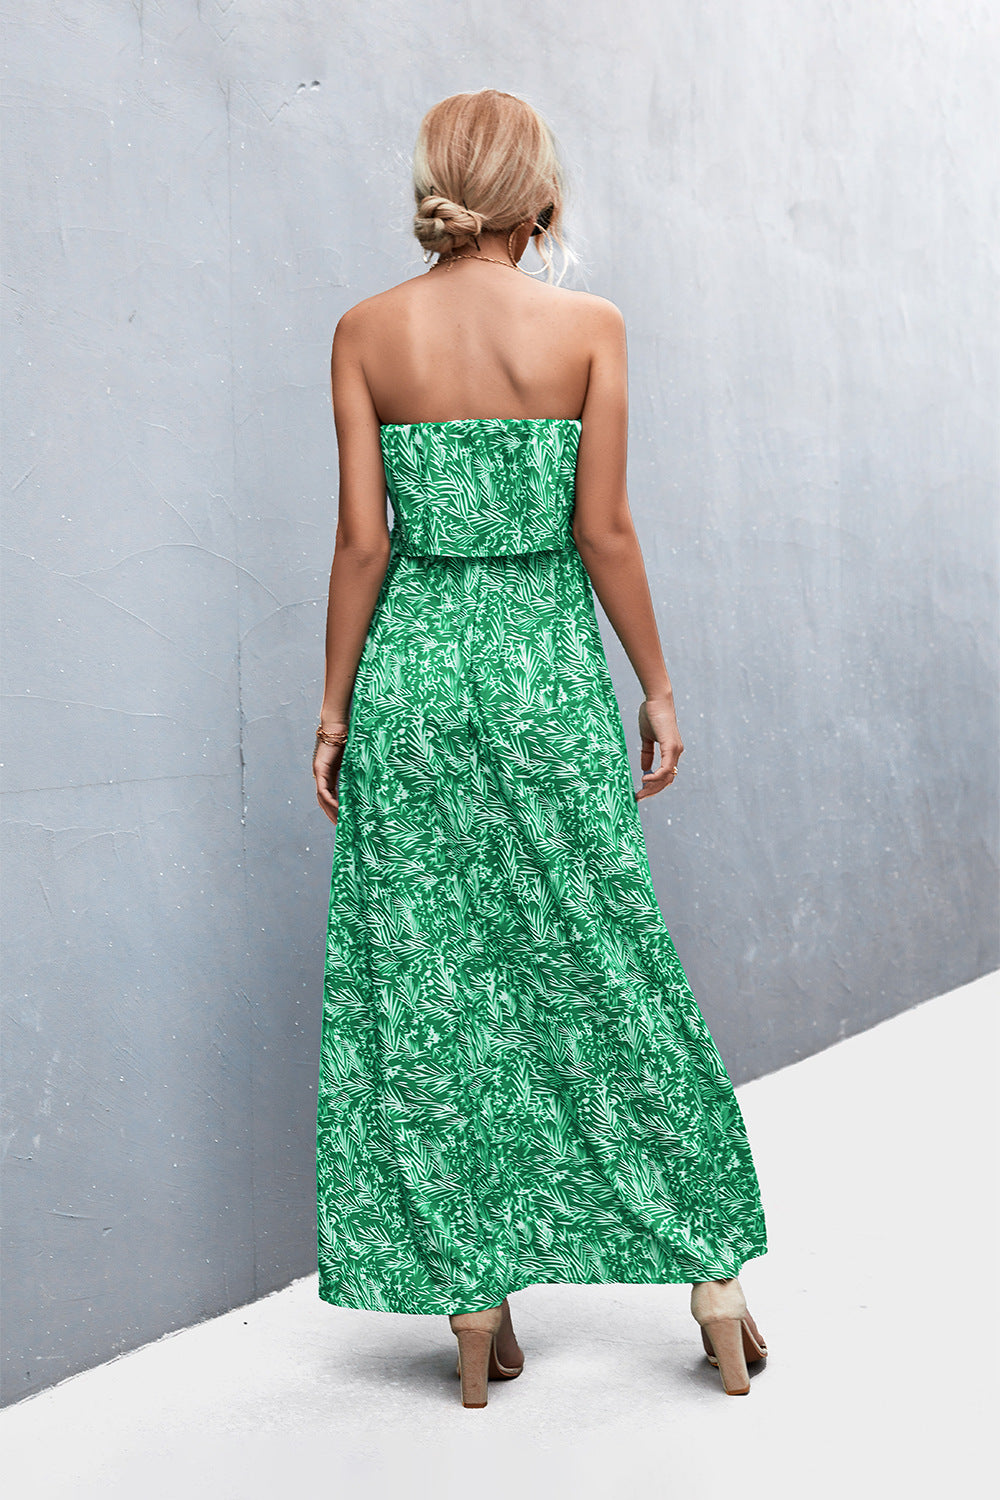 - Strapless Split Maxi Dress - 5 colors - womens dress at TFC&H Co.